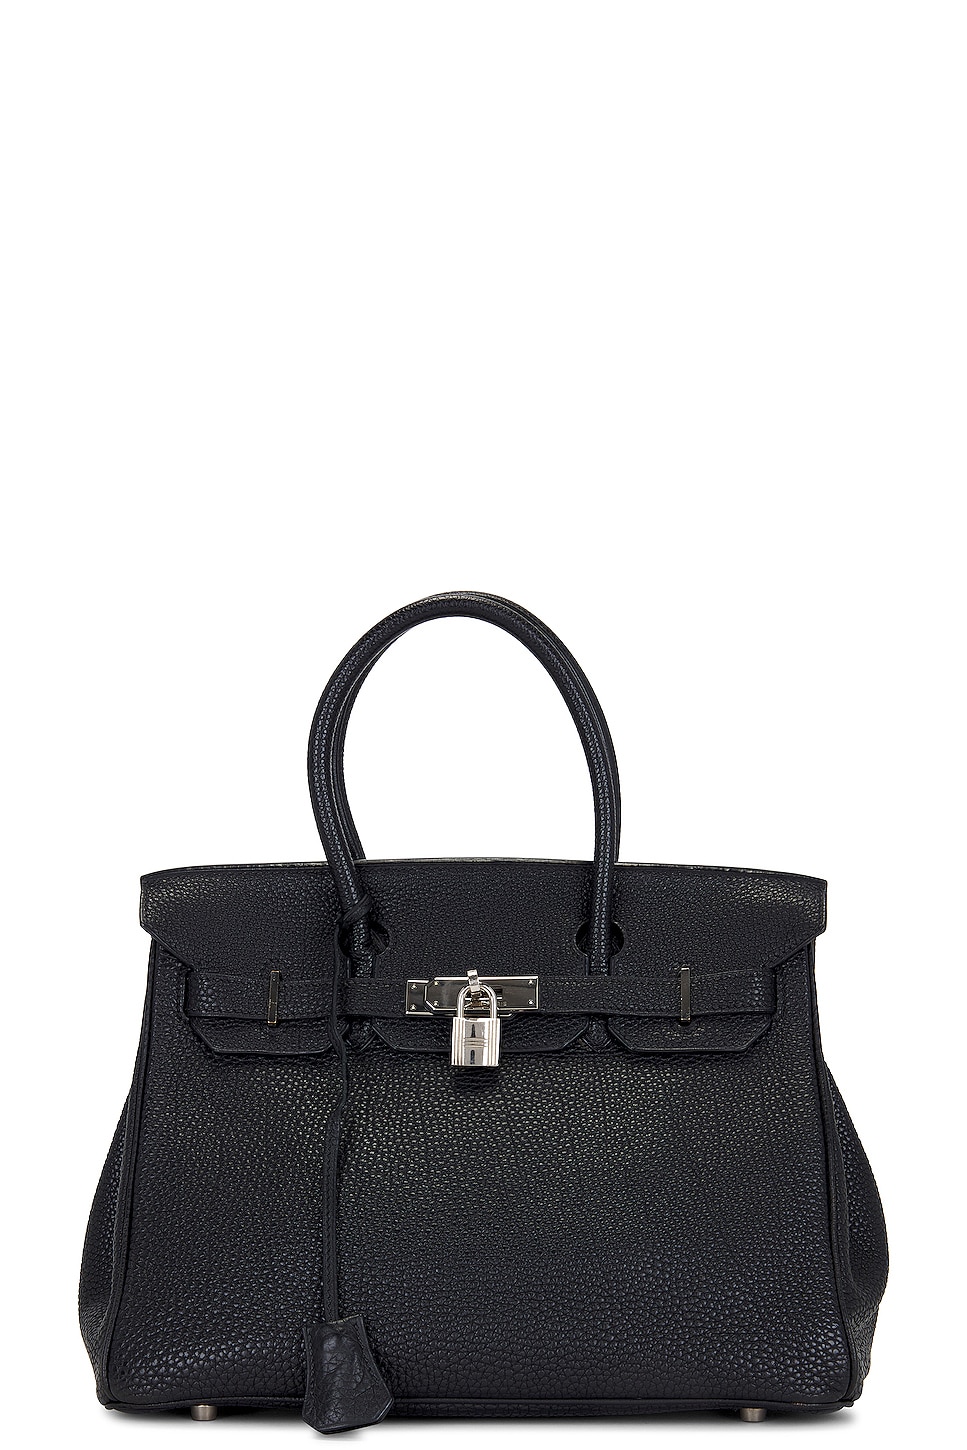 Birkin 30 Handbag in Black